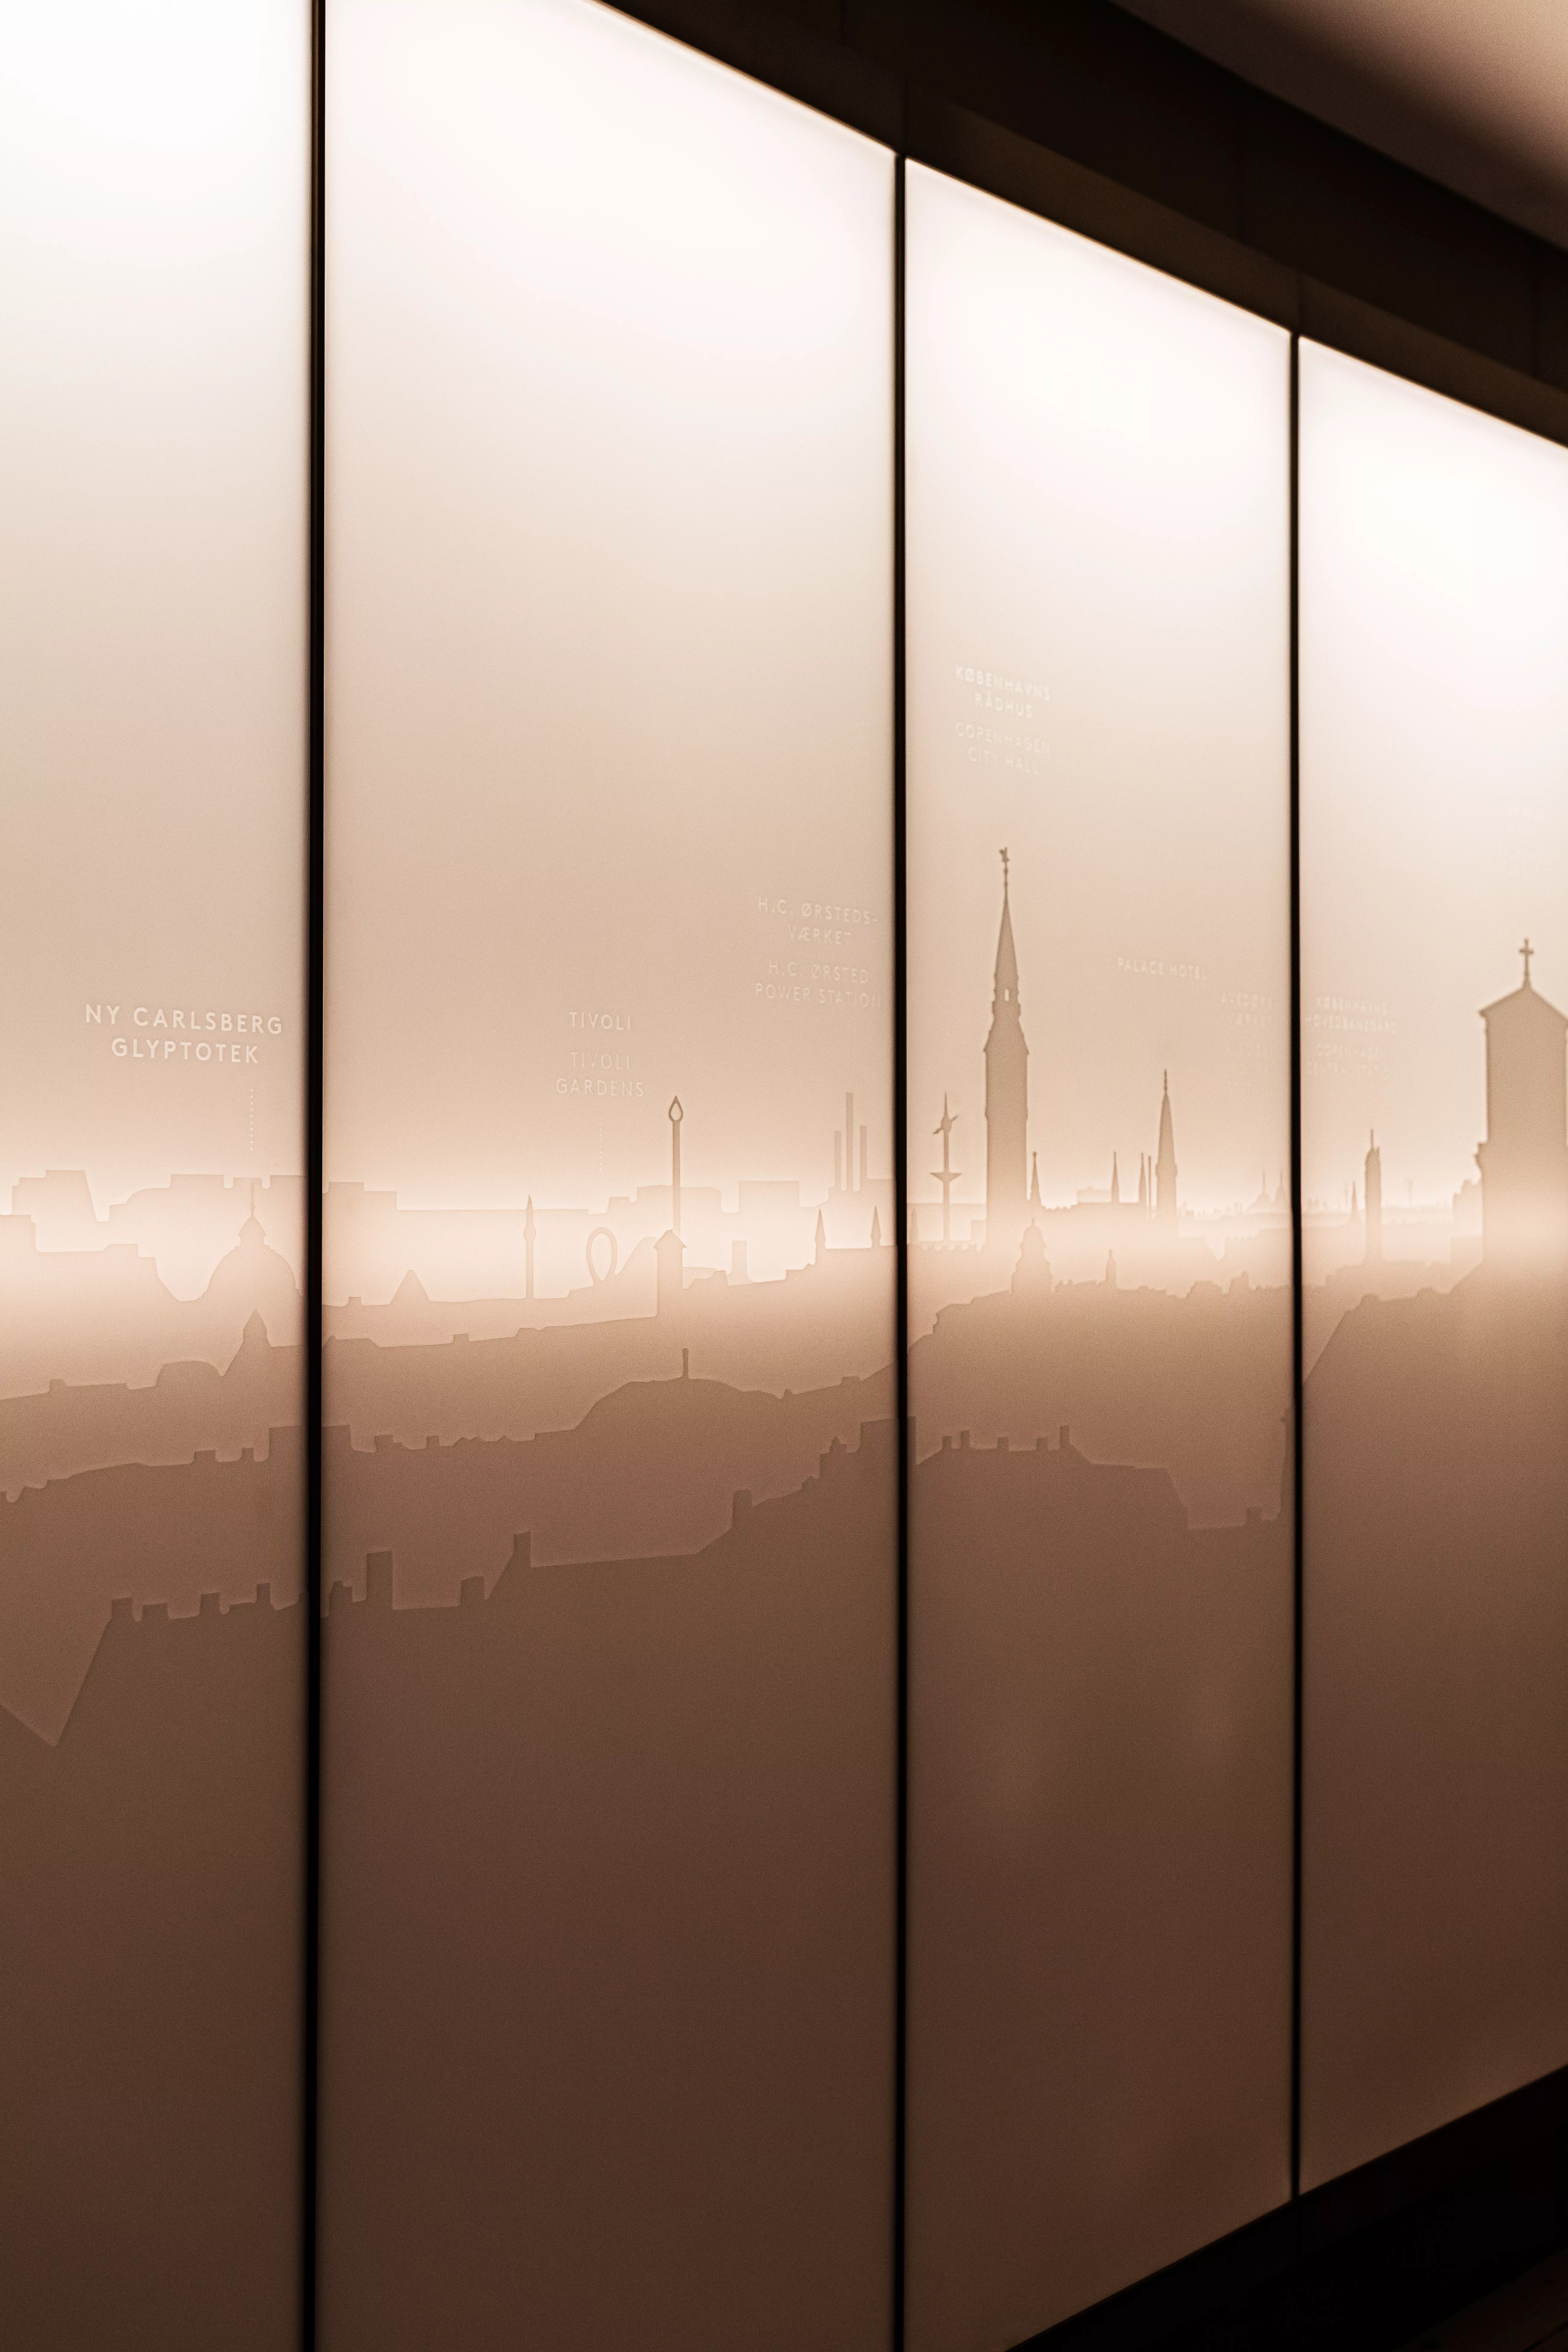 HIMACS portrays the city in the new Museum of Copenhagen